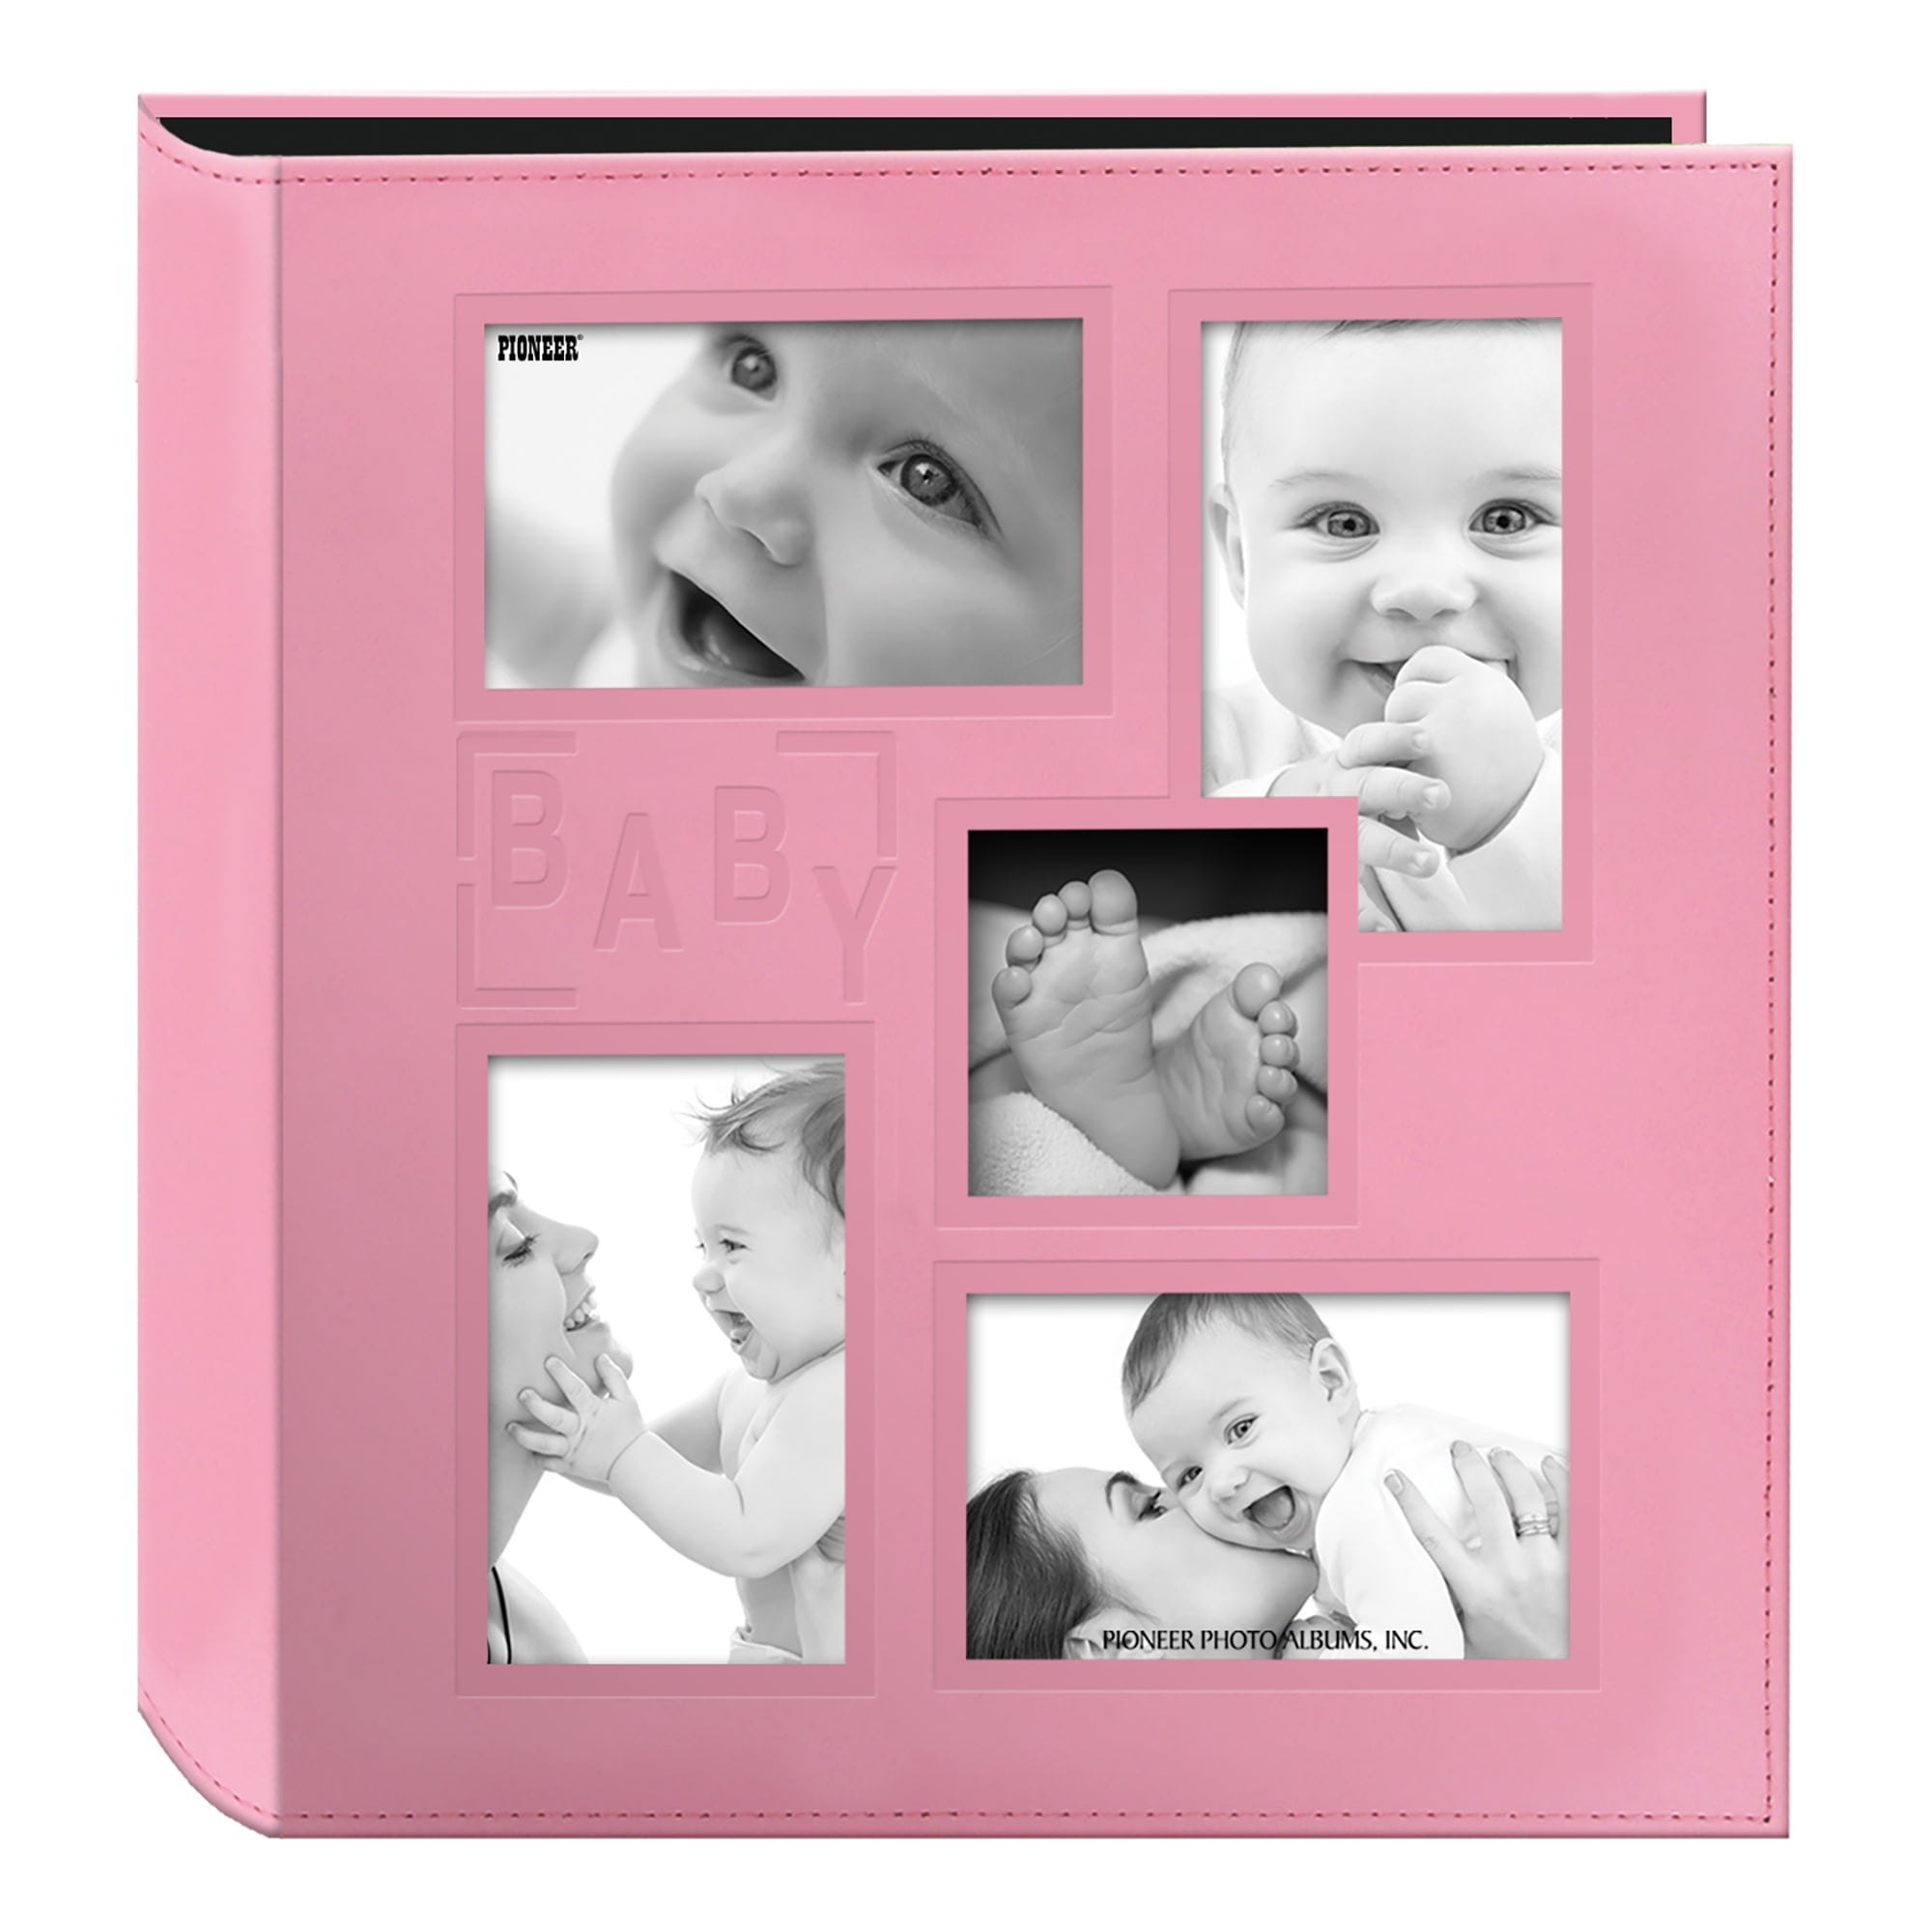  FondReco Baby Photo Album 4x6 600 Photos, 4x6 Photo Albums,  Fabric Cover Photo Albums 4x6, Large Capacity Picture Albums, Family Photo  Album, Large Cute Photo Album (600 Photos, Heart Pink) : Baby